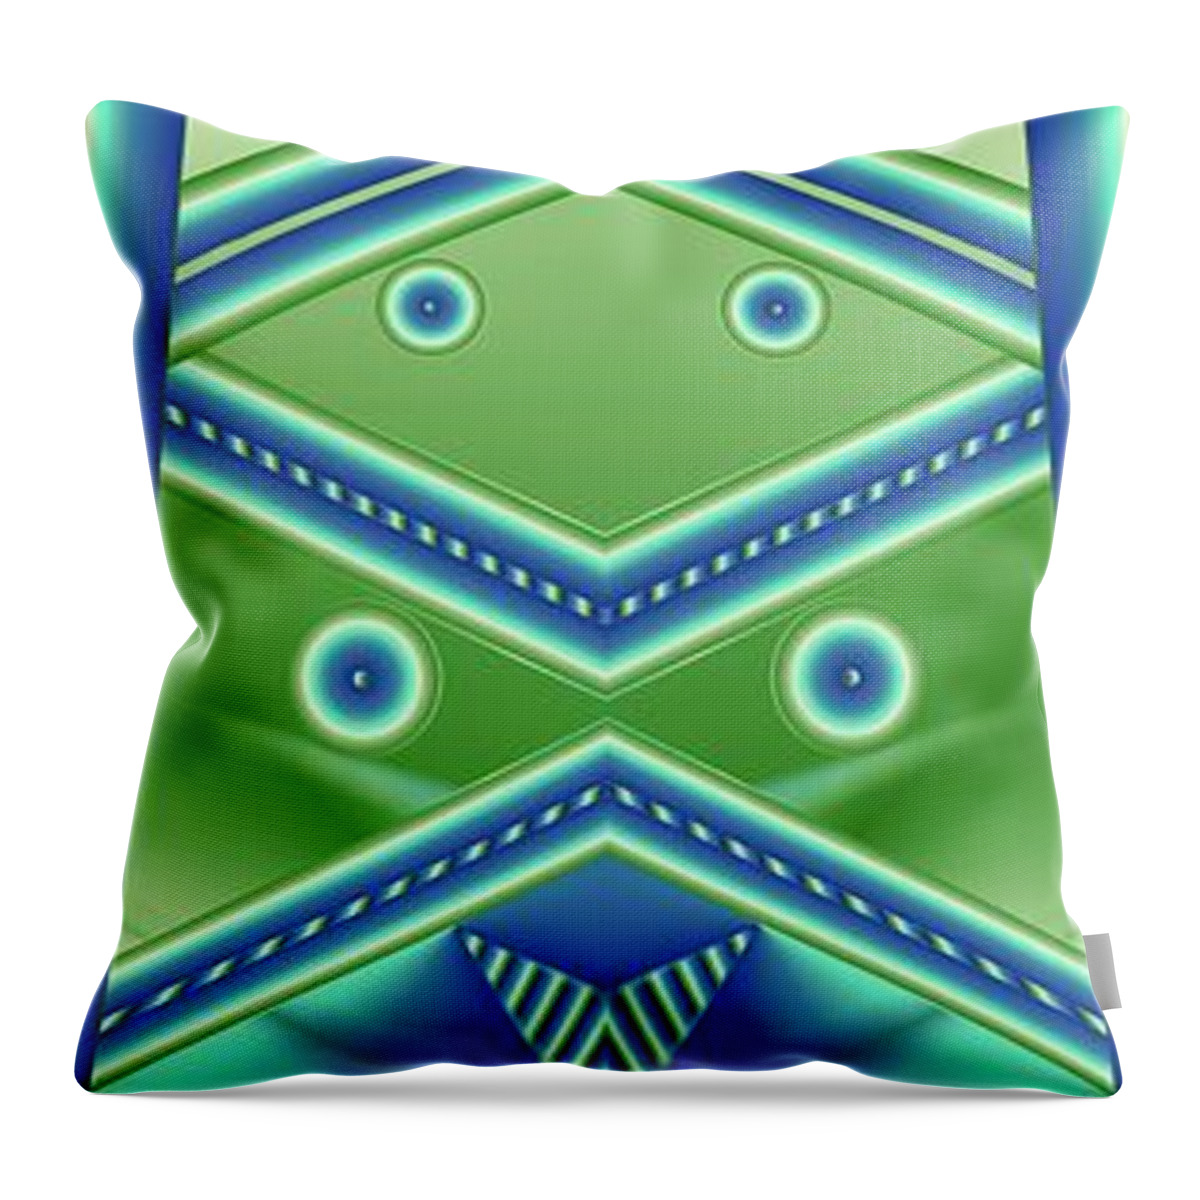 Aquamarine Throw Pillow featuring the digital art Aquamarine by Ronald Bissett